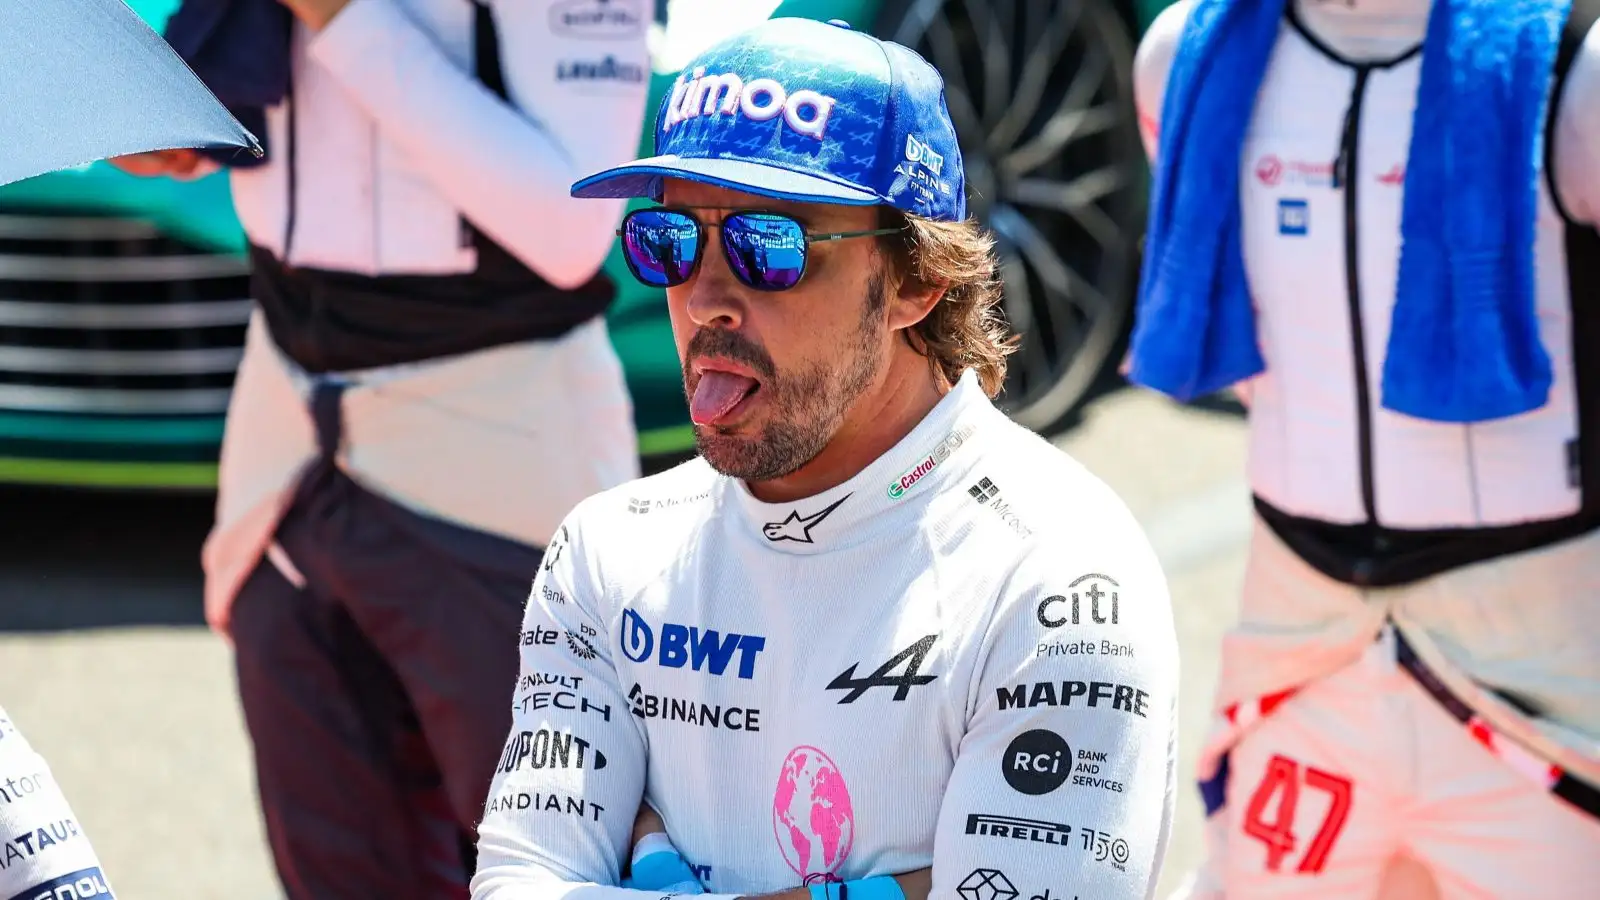 Fernando Alonso sticks his tongue out. Baku, June 2022.